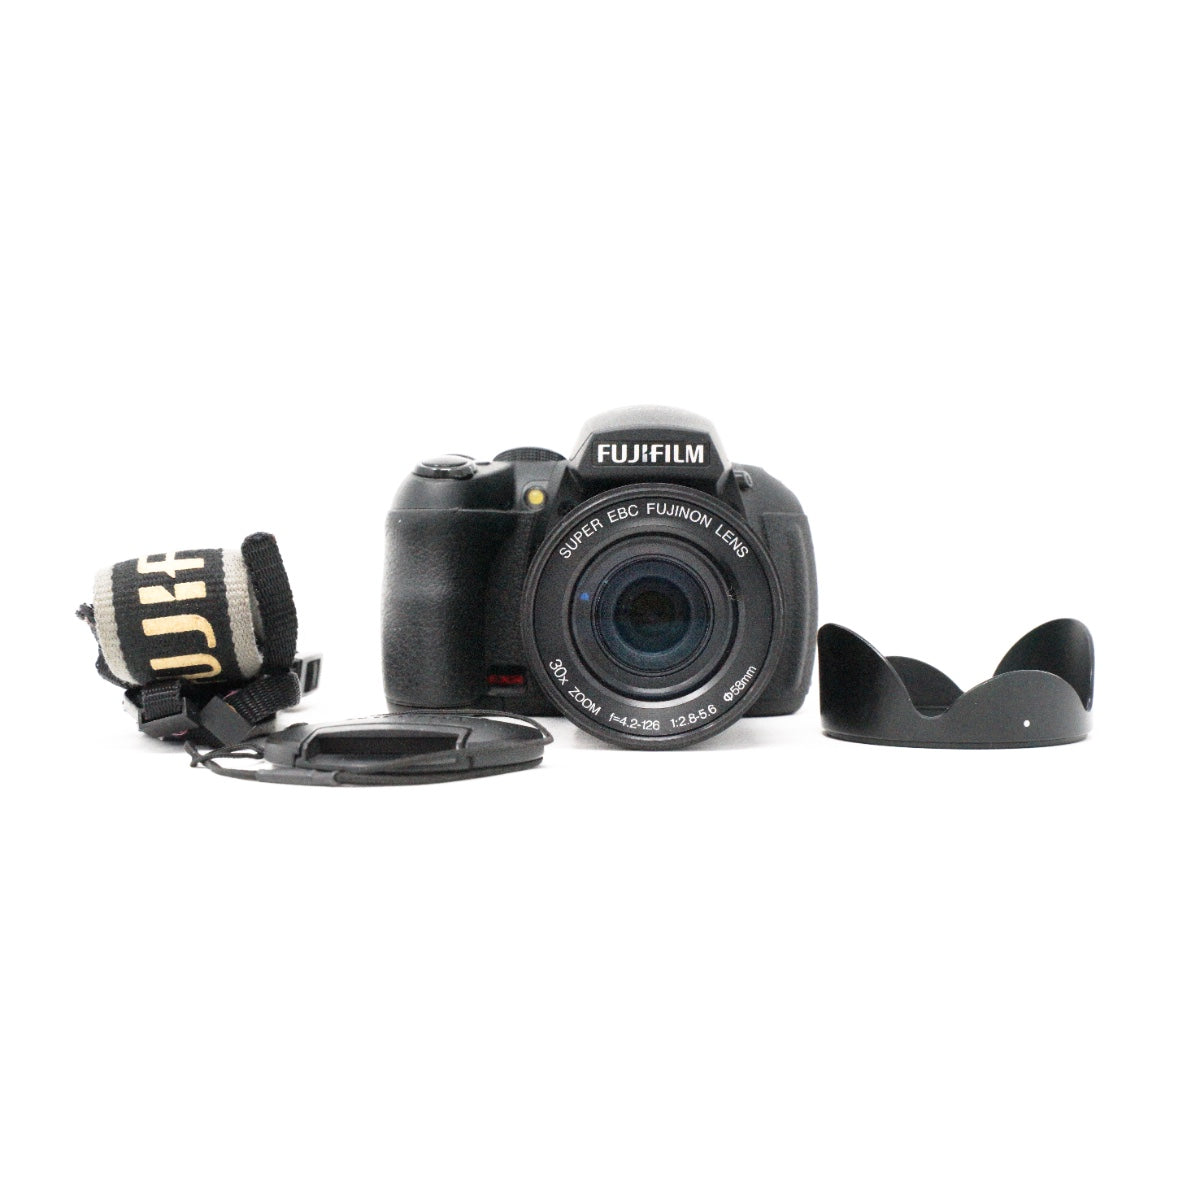 Used Fuji Finepix HS20 EXR Digital Bridge camera